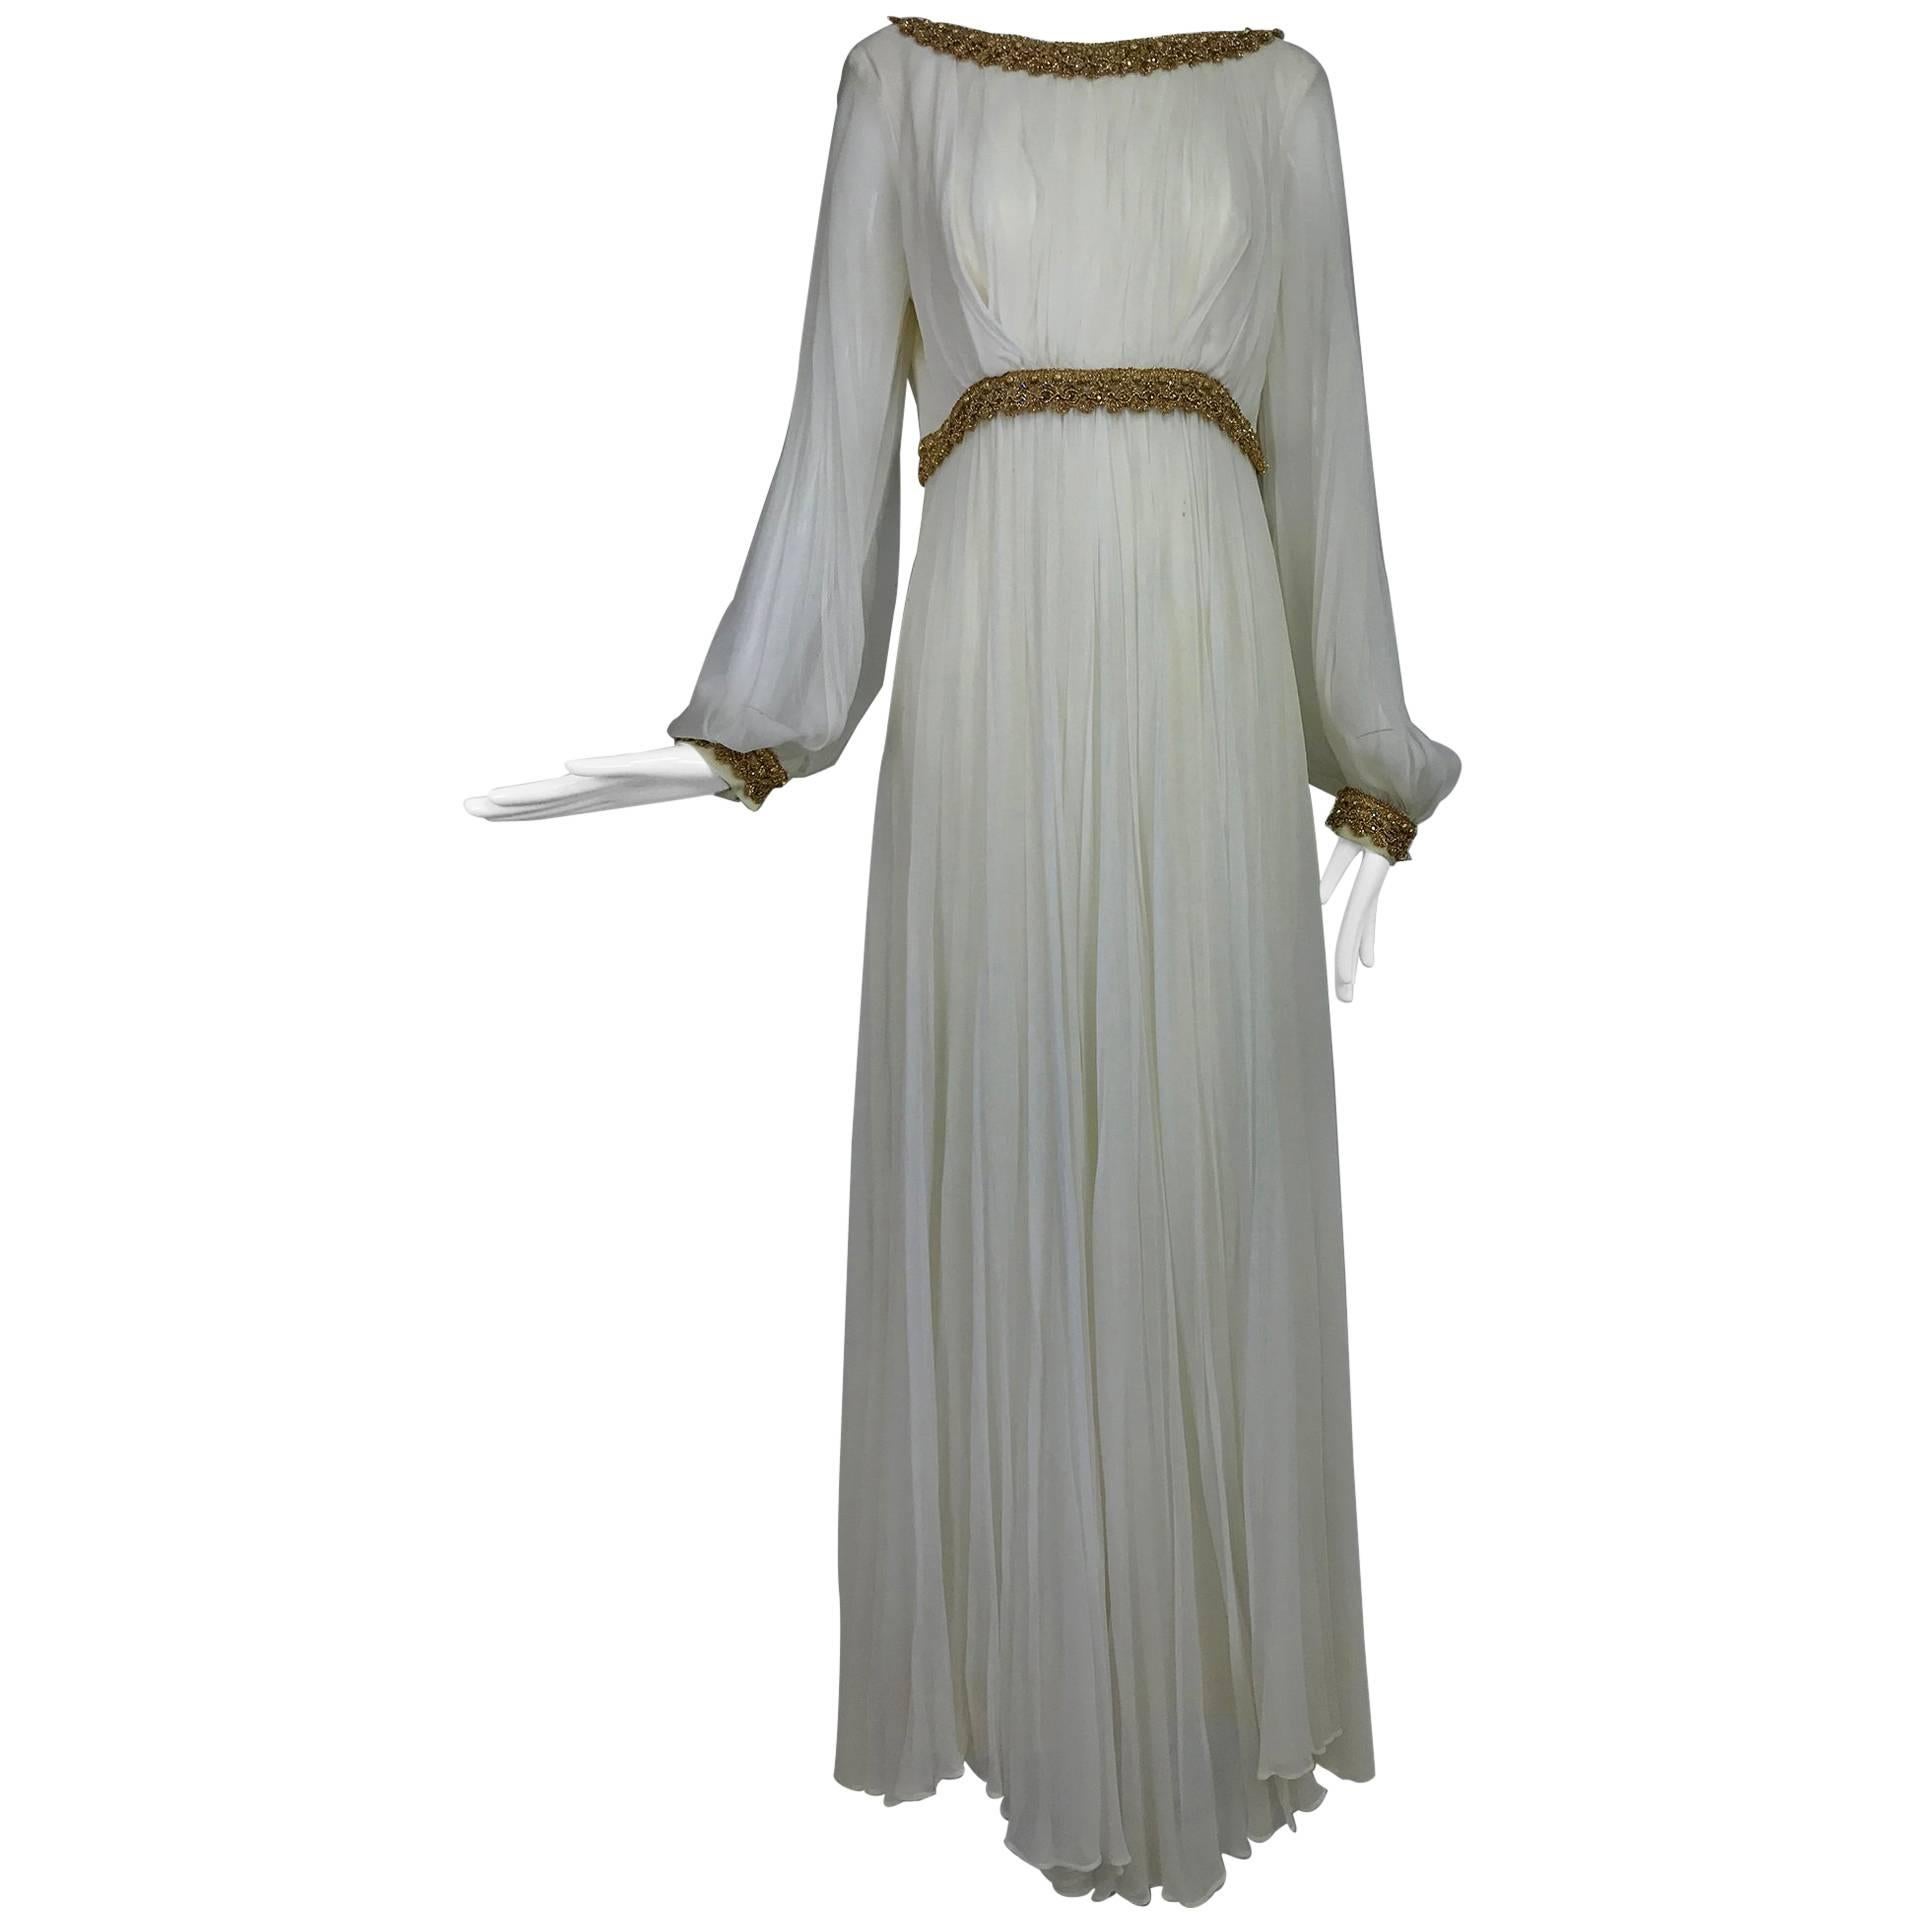 Vintage cream double layer silk chiffon maxi dress with gold braid trim 1970s